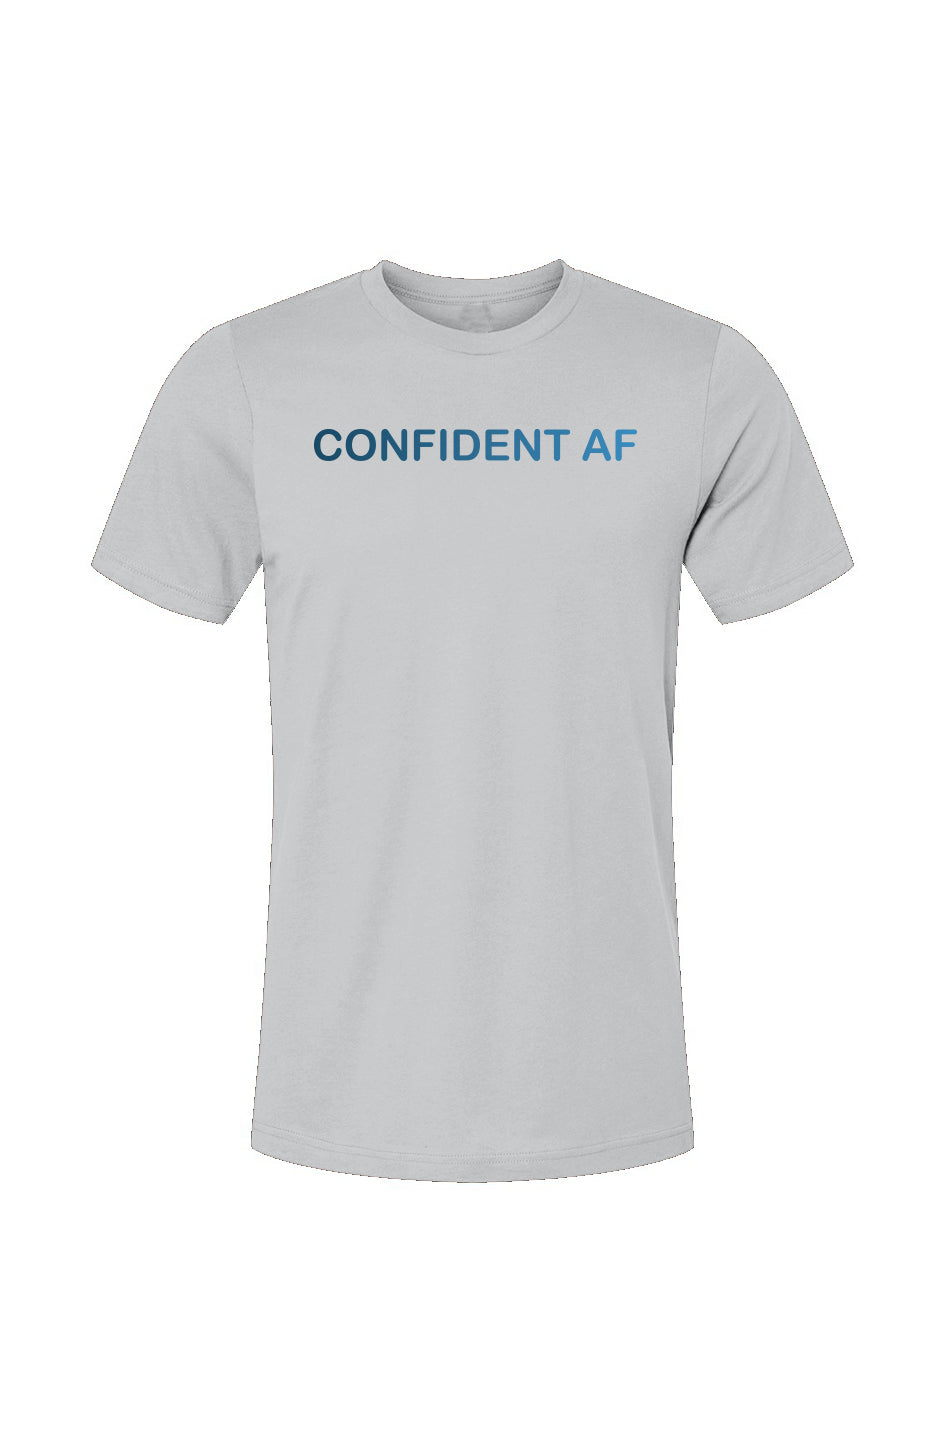 Confident AF Tee - Gradient Silver/Blue